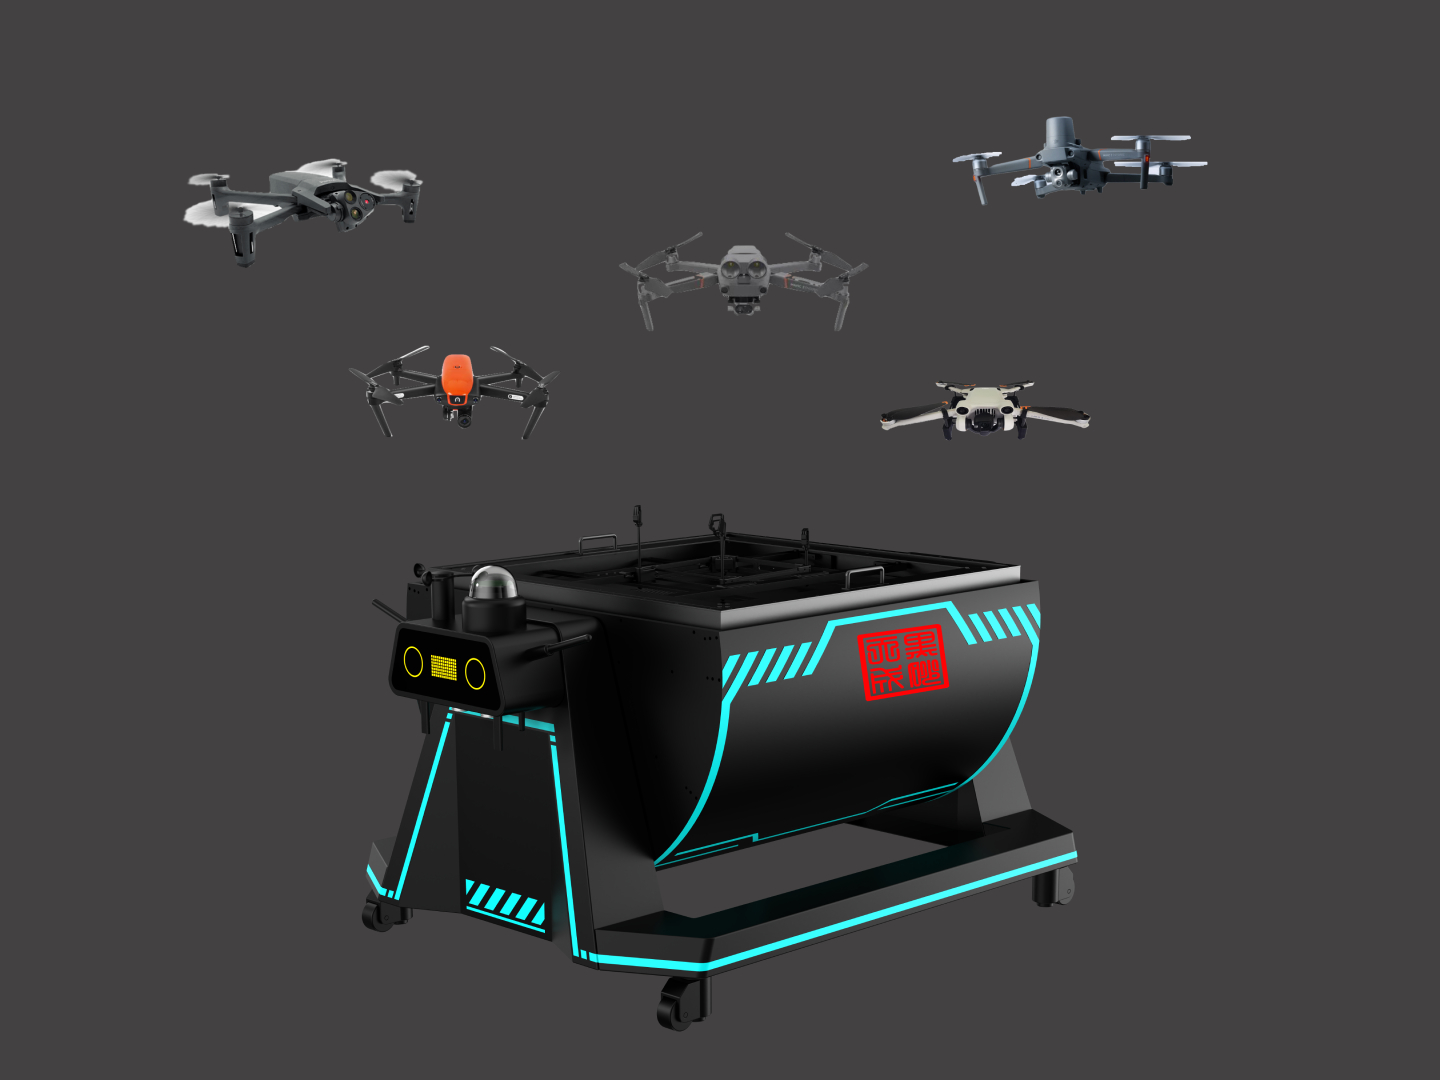 The compatibility of HEISHA drone charging docks